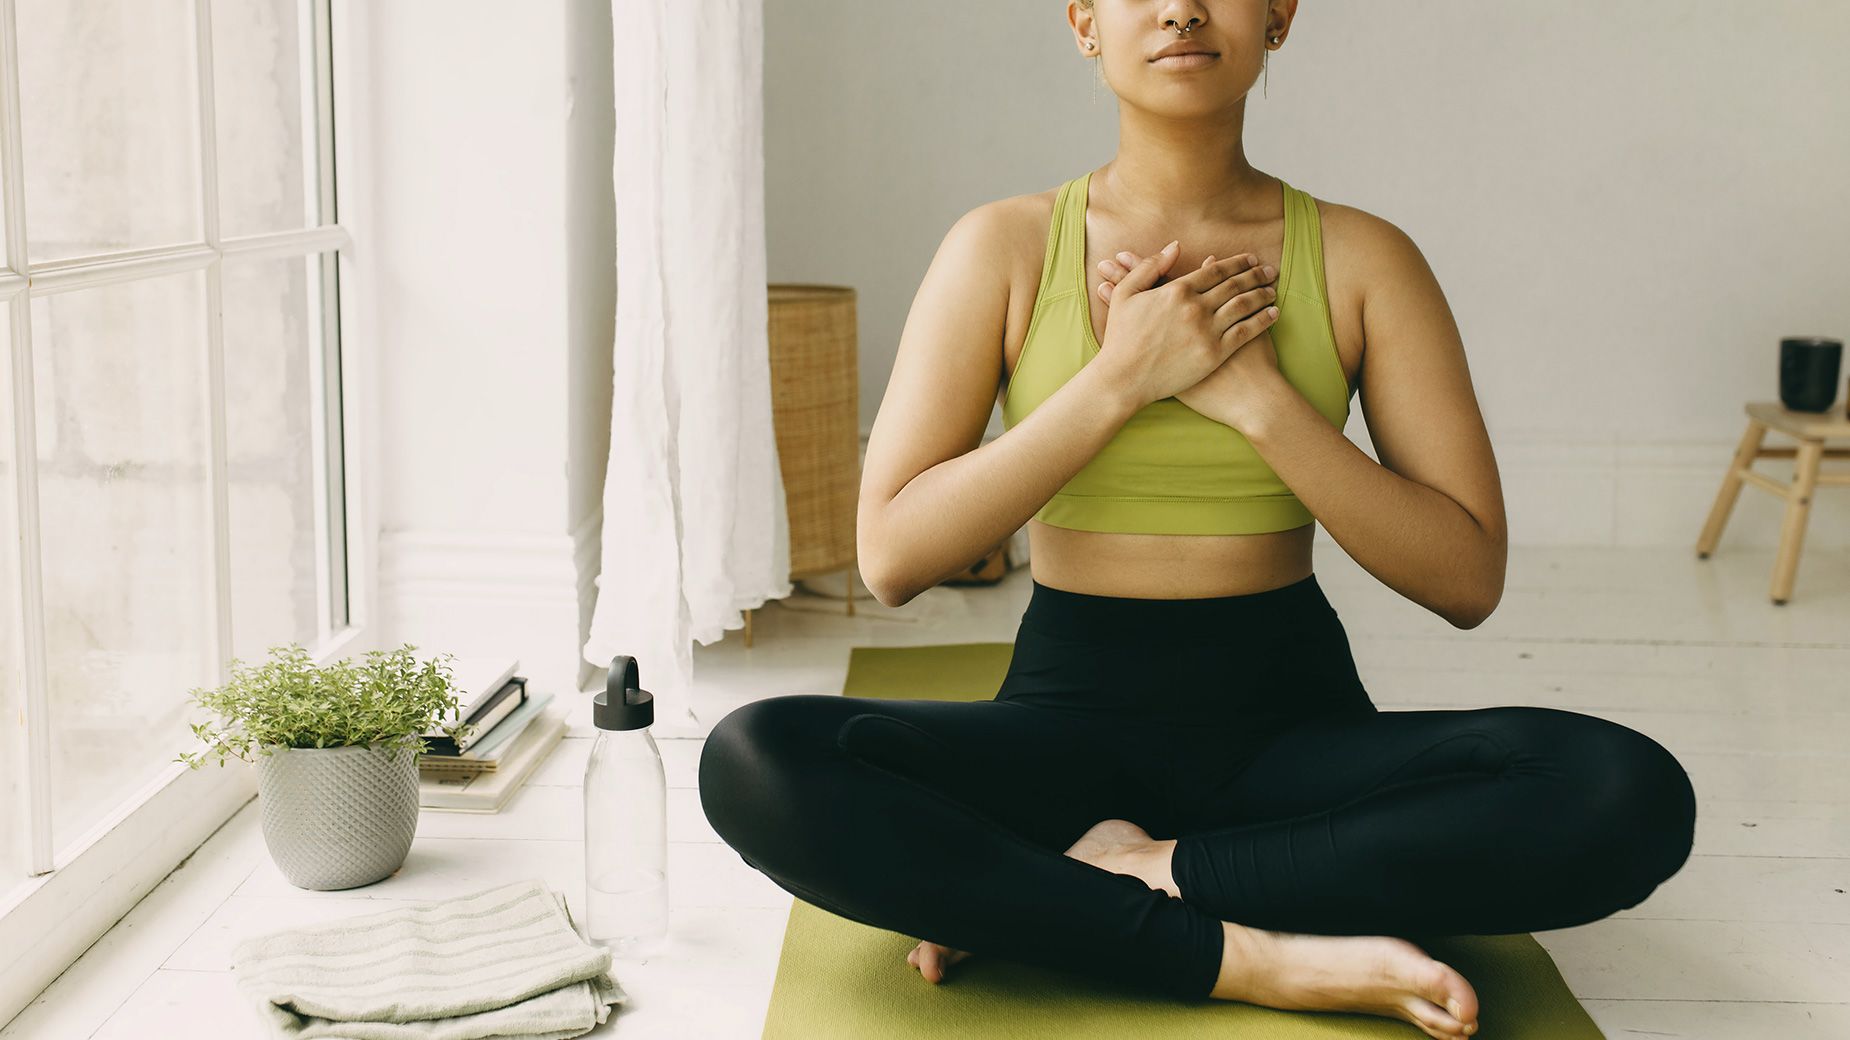 Mindfulness, Yoga Can Improve Mental Health, Studies Show